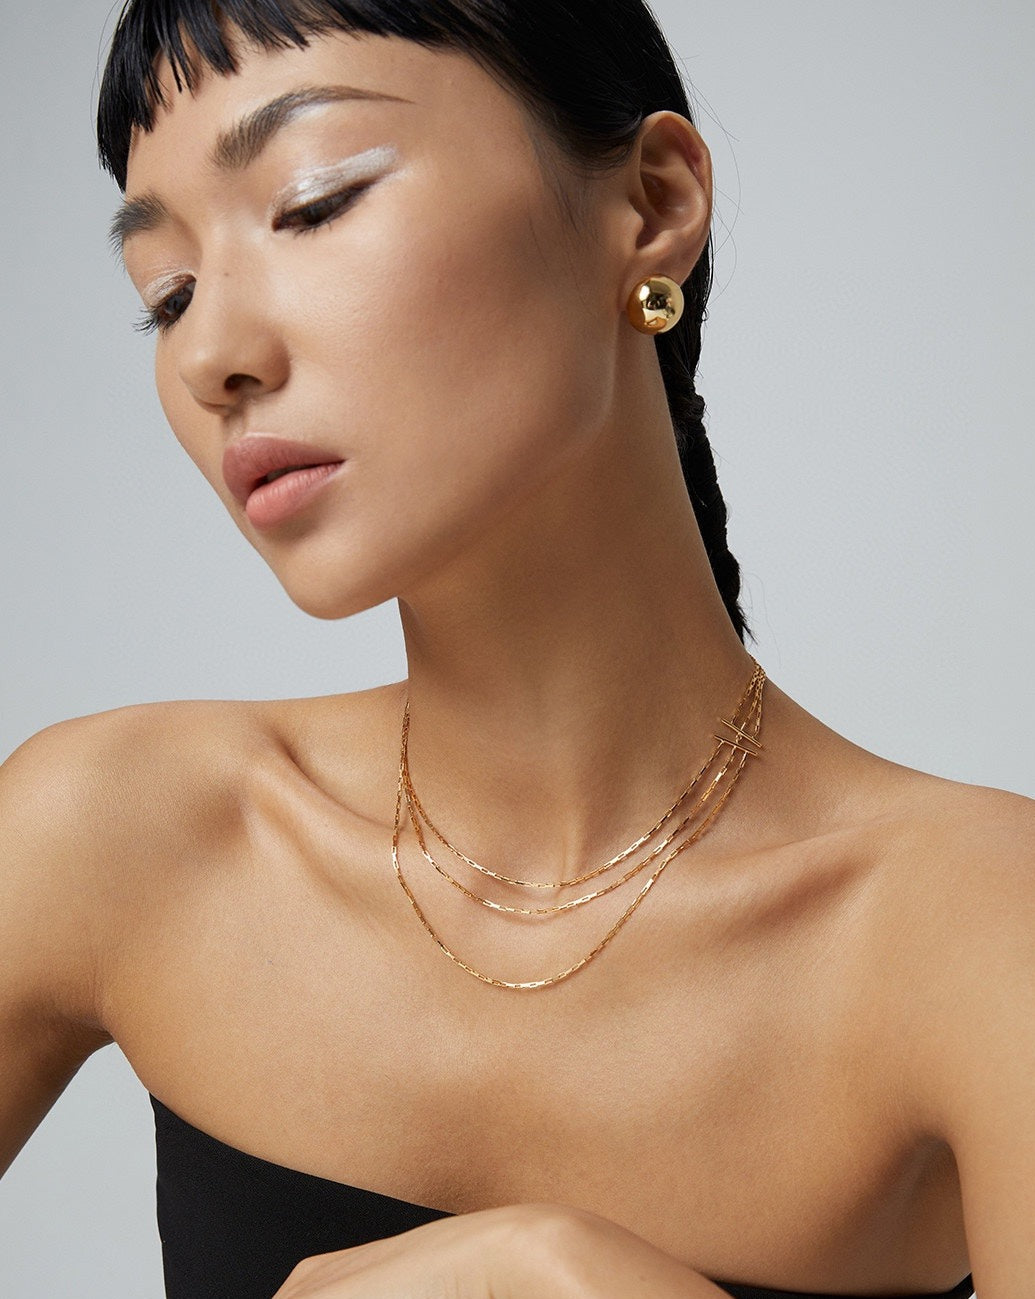 fashion-jewelry-minimalist-jewelry-design-jewelry-statement-necklace-pearl-earring-bracelet-rings-gold-coated-silver-bijoux-retro-gold-earrings